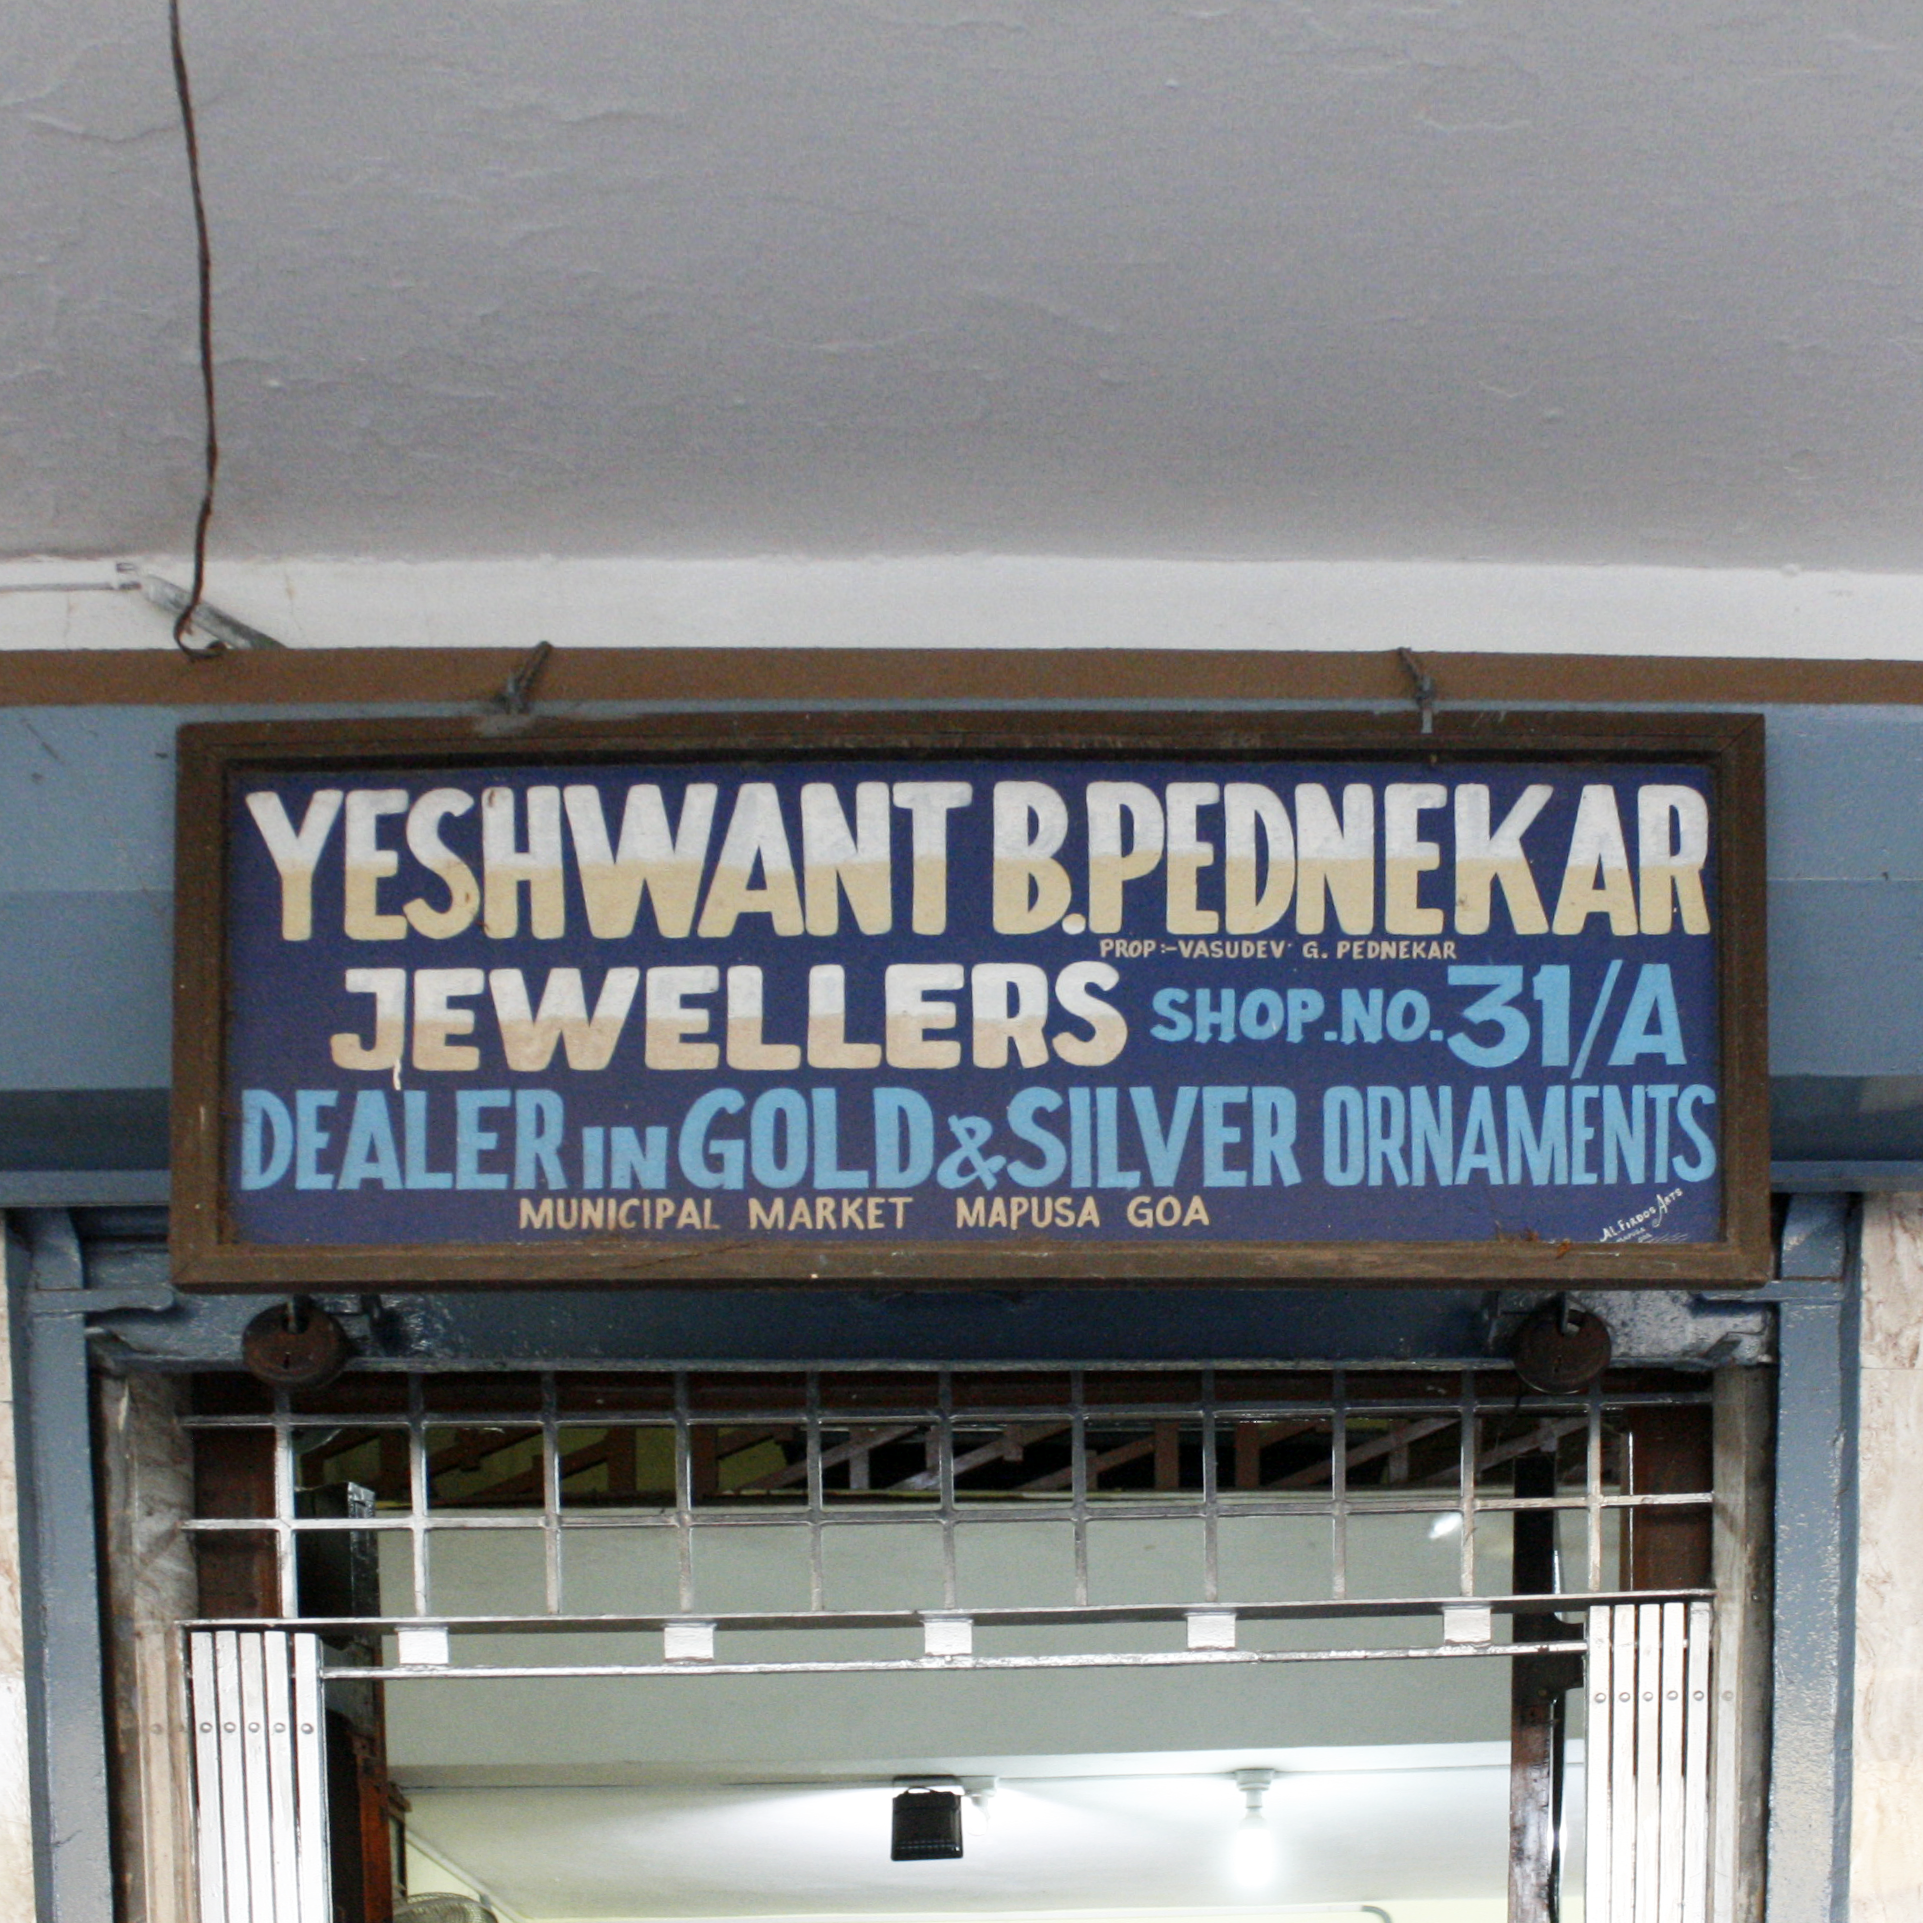 Yeshwant B. Pednekar Jewellers